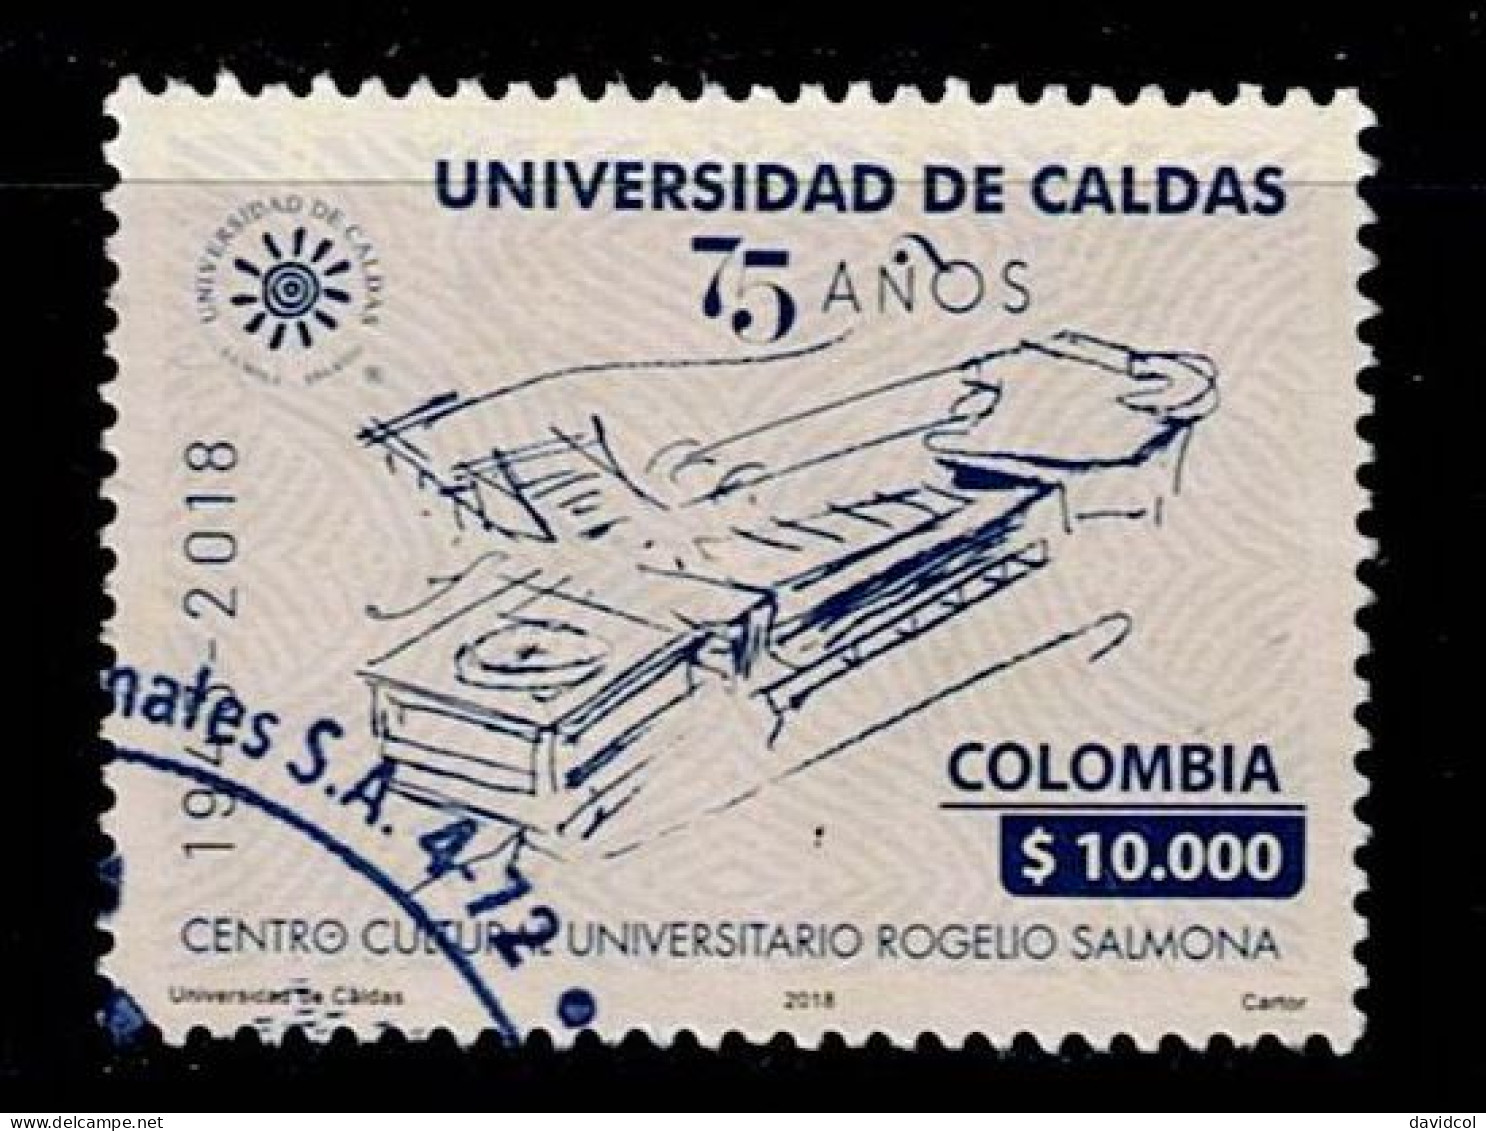 0066K-KOLUMBIEN - 2018 – MNH – 75TH ANNIVERSARY OF CALDAS UNIVERSITY - Colombie